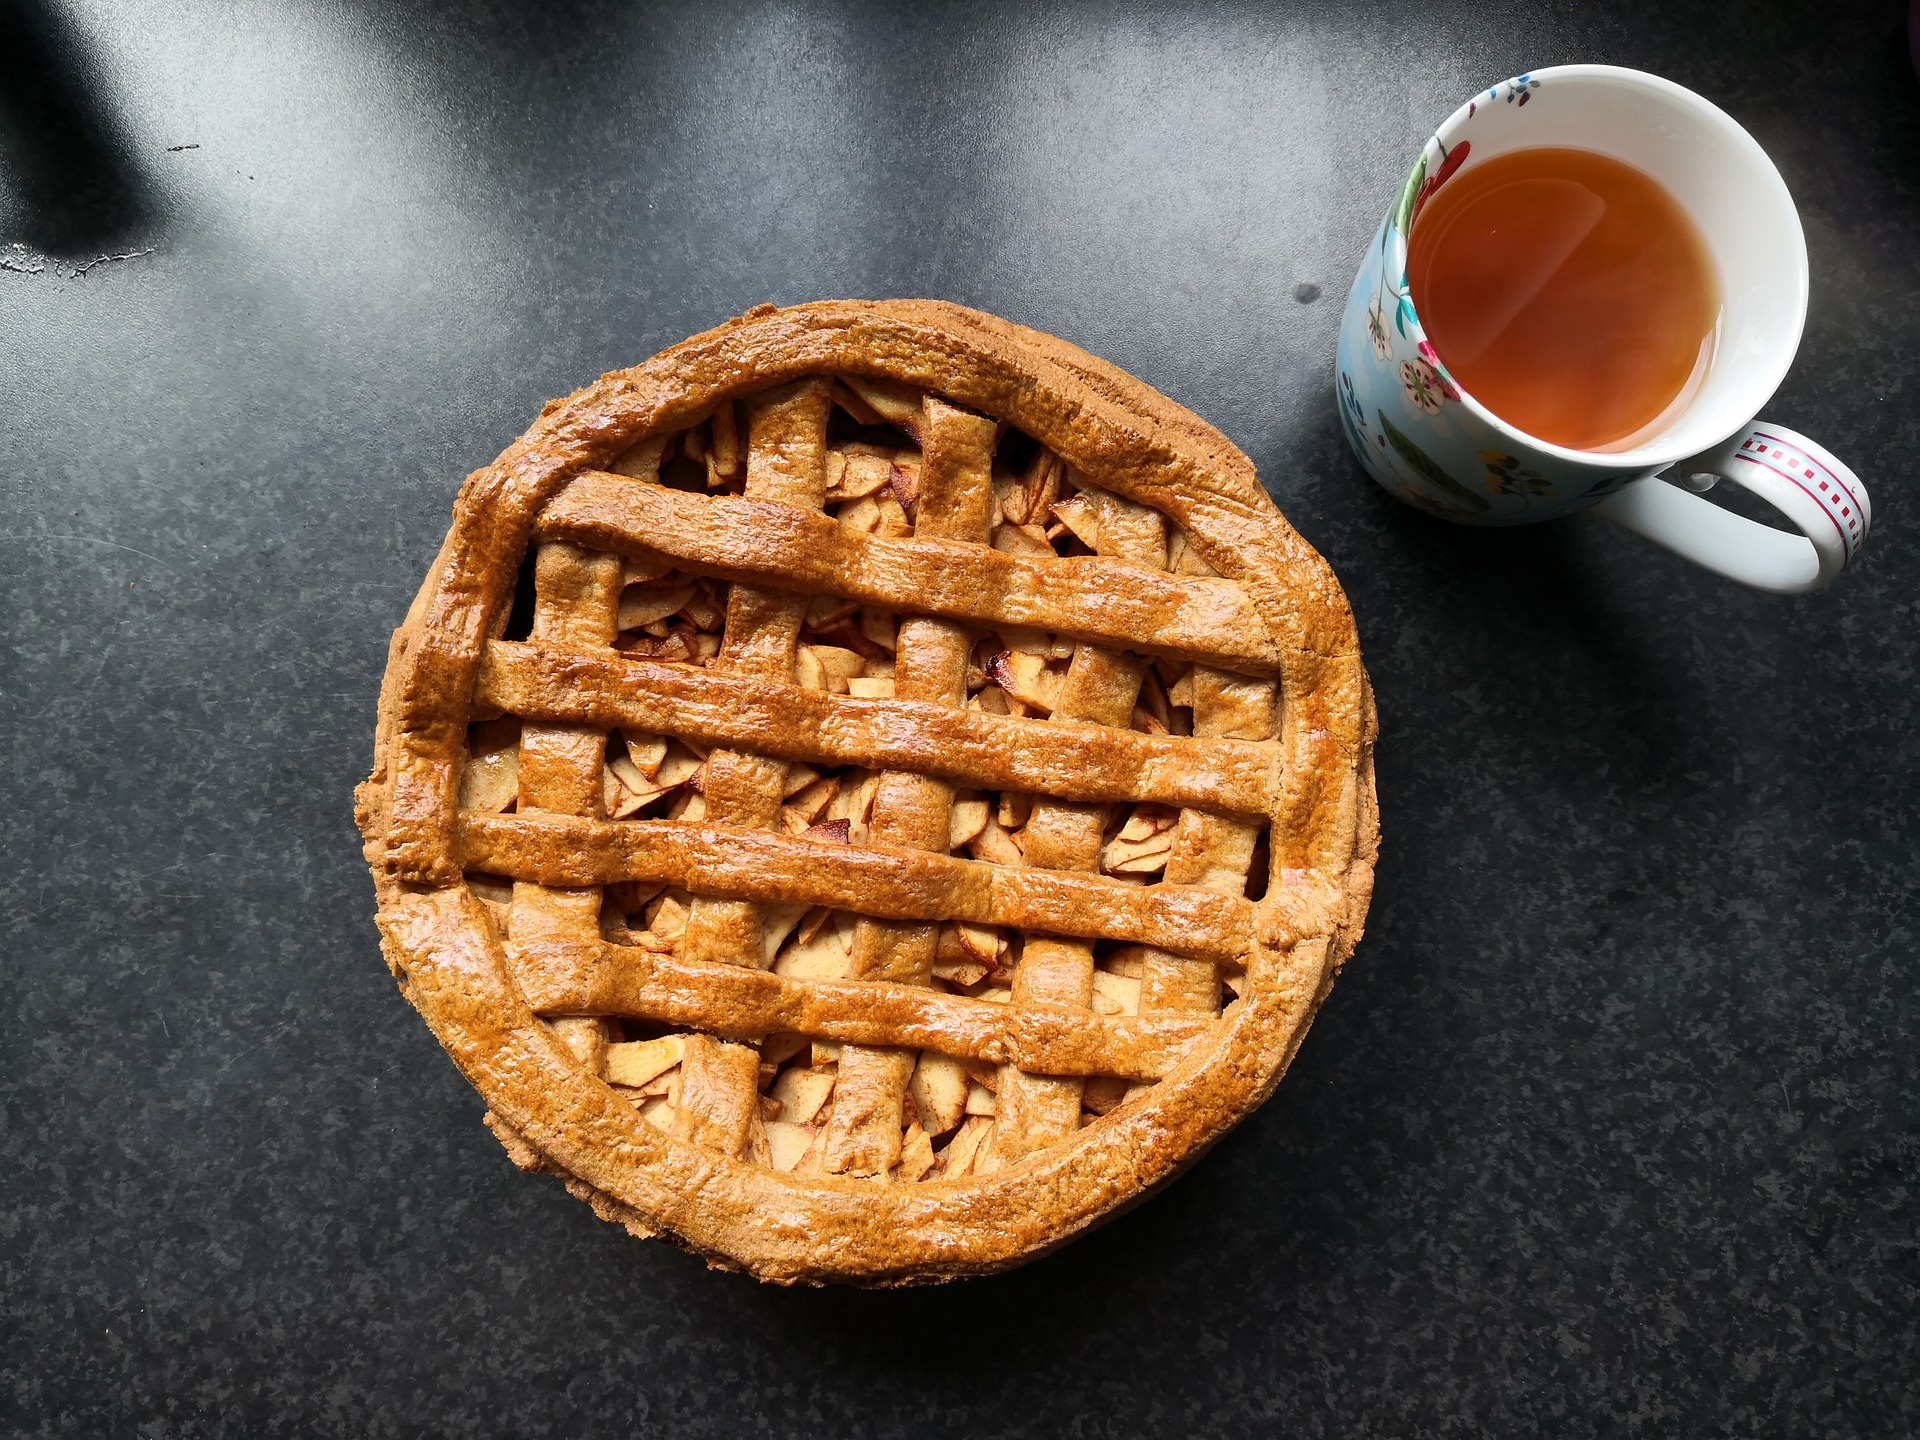 Vegan Apple Pie With Caramel Drizzle Recipe